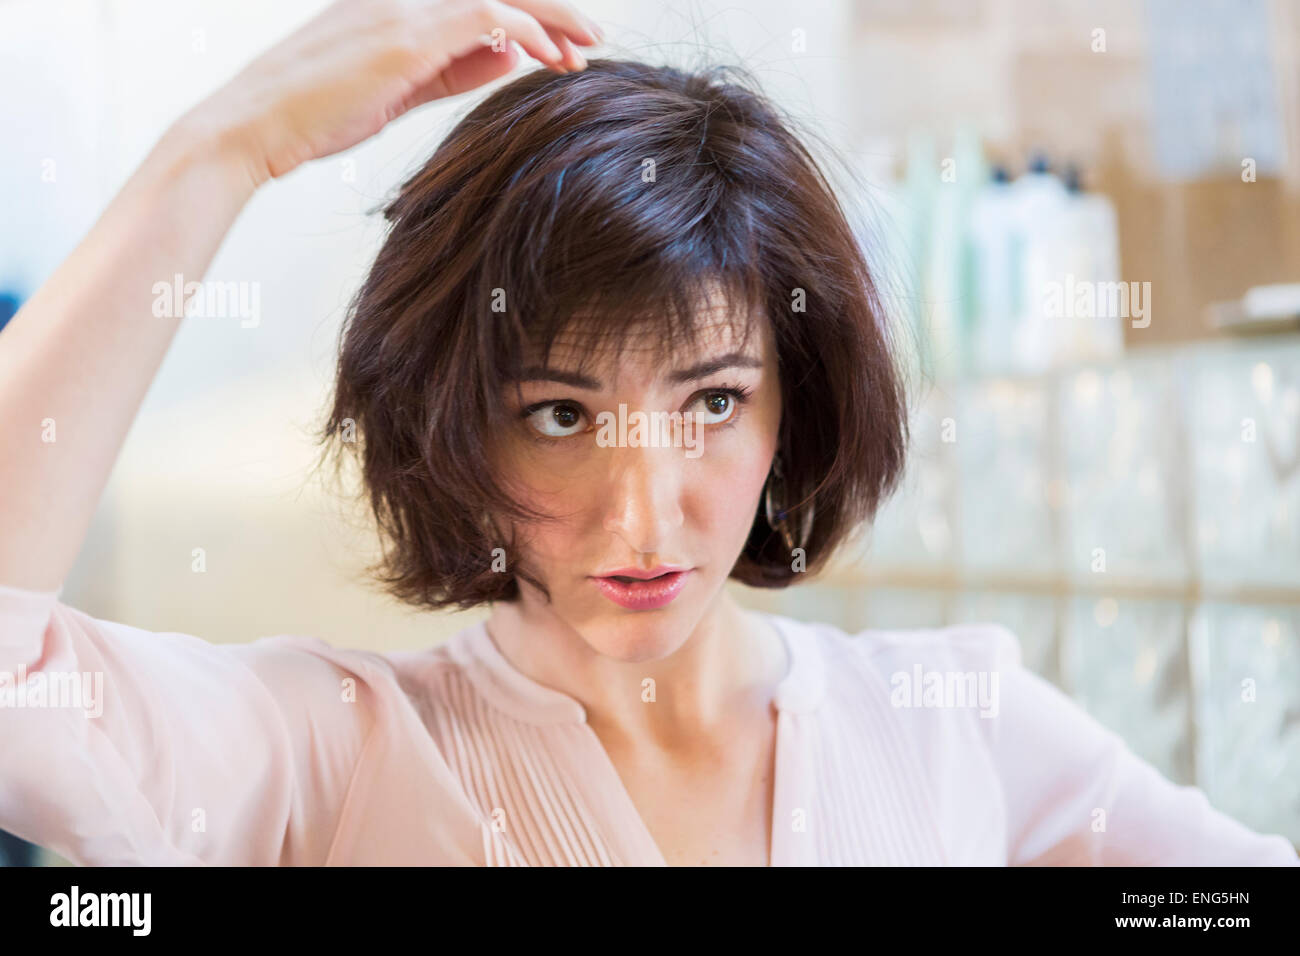 Close up of Hispanic woman examining her hair Stock Photo